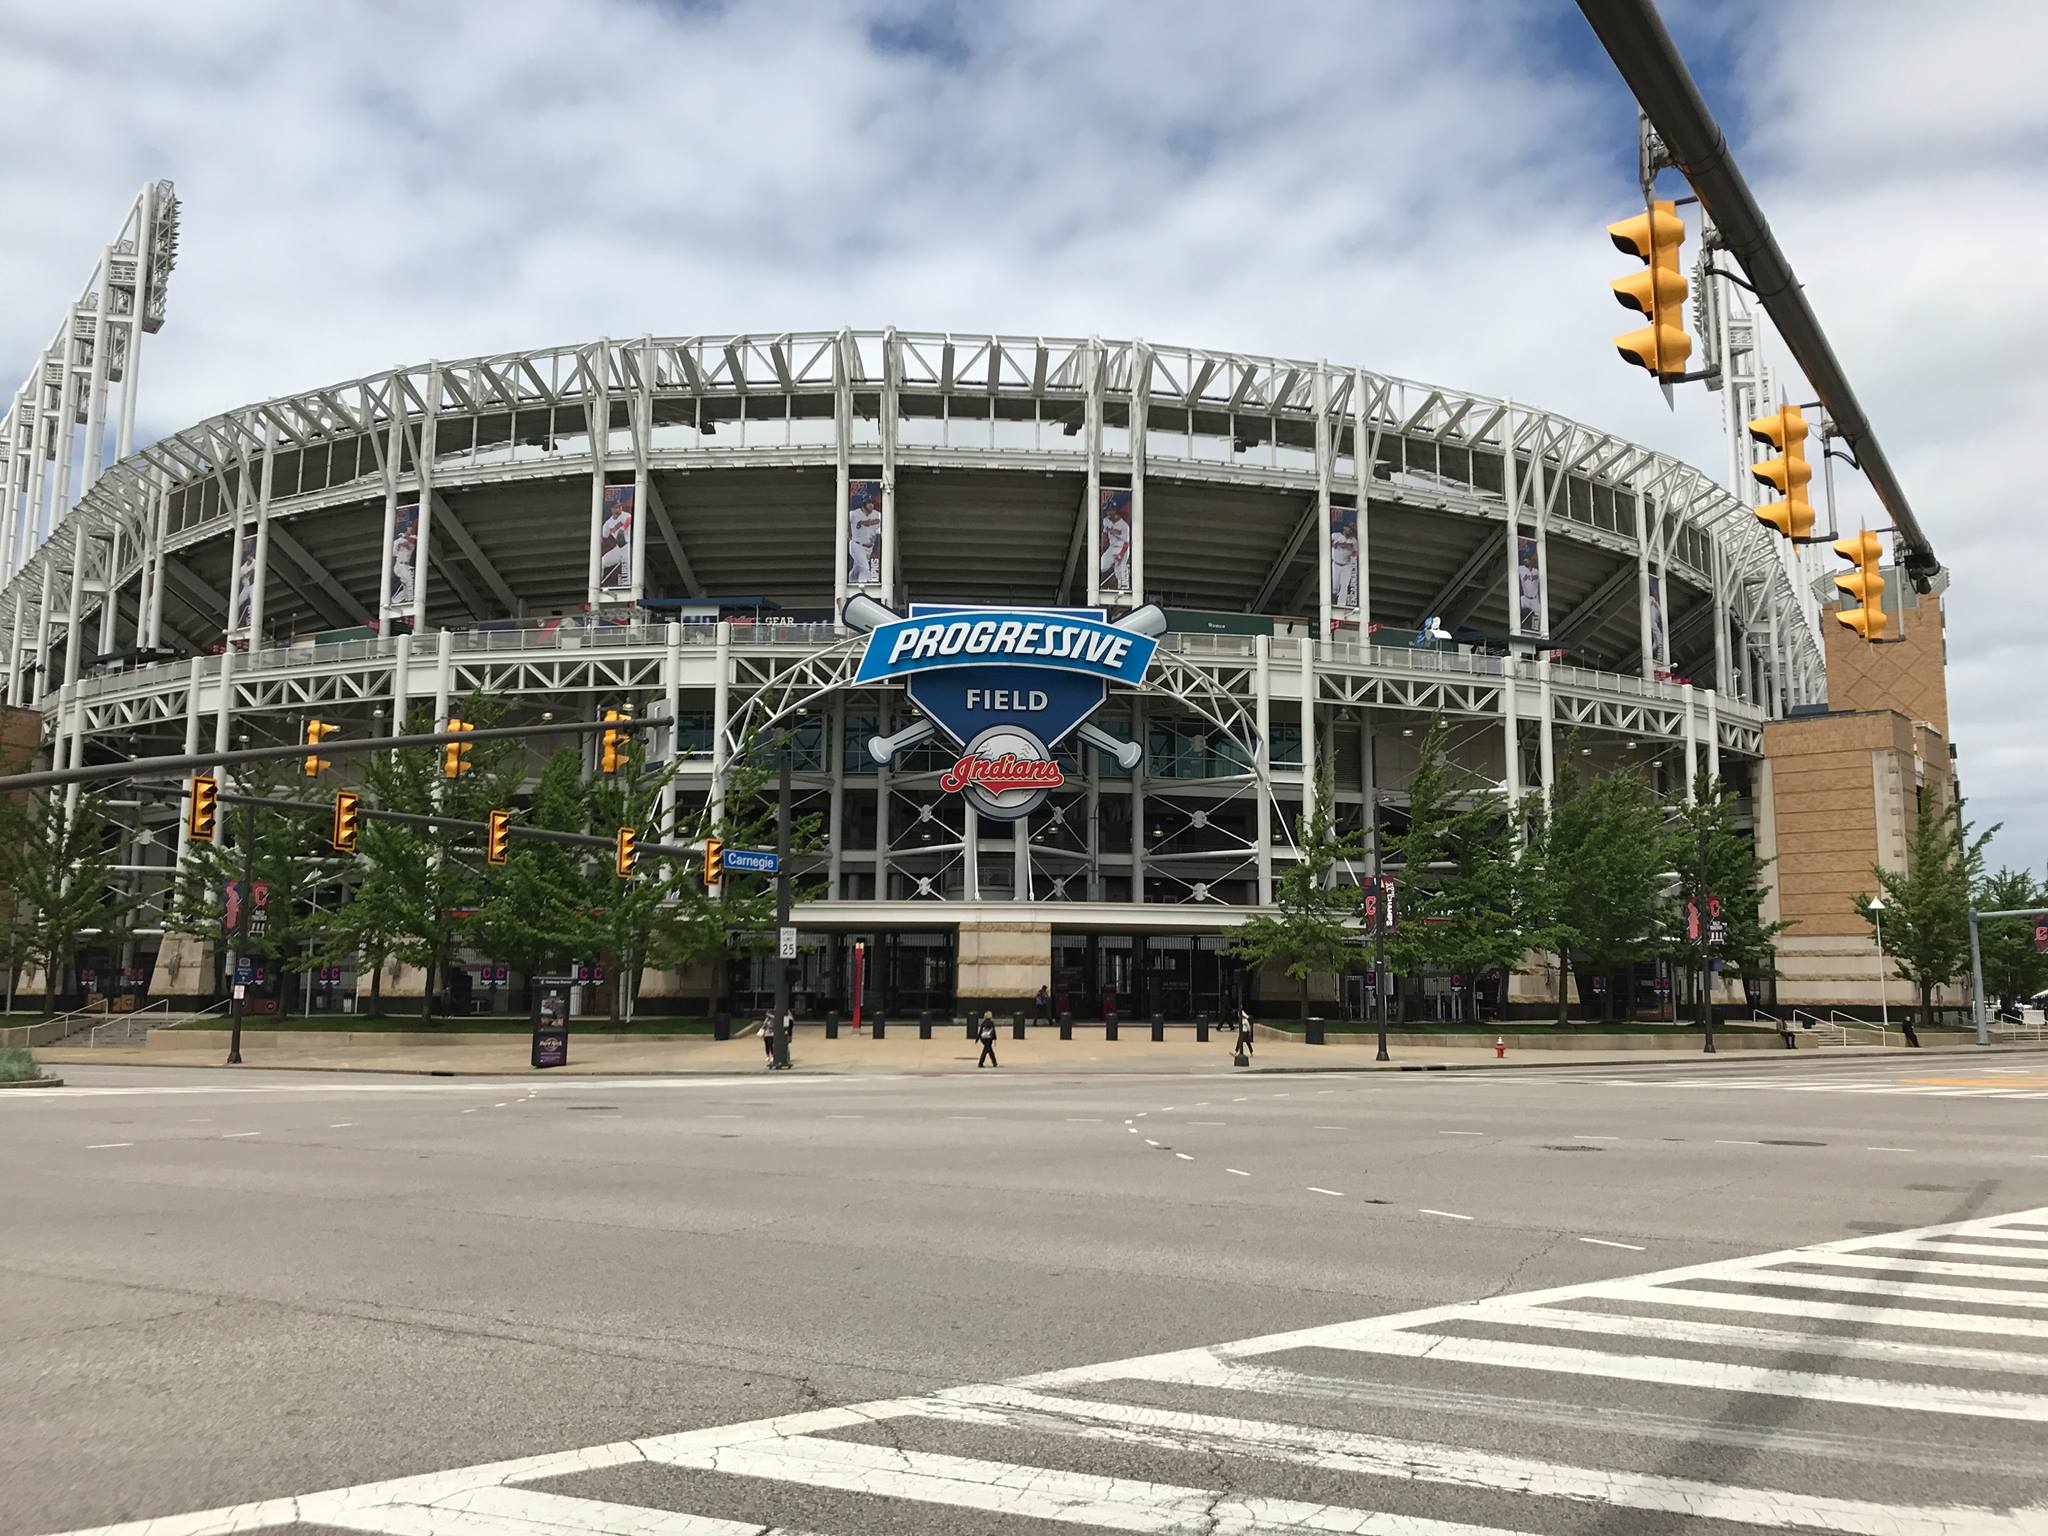 Ballpark in Arlington architect reflects on stadium built to last 100 years